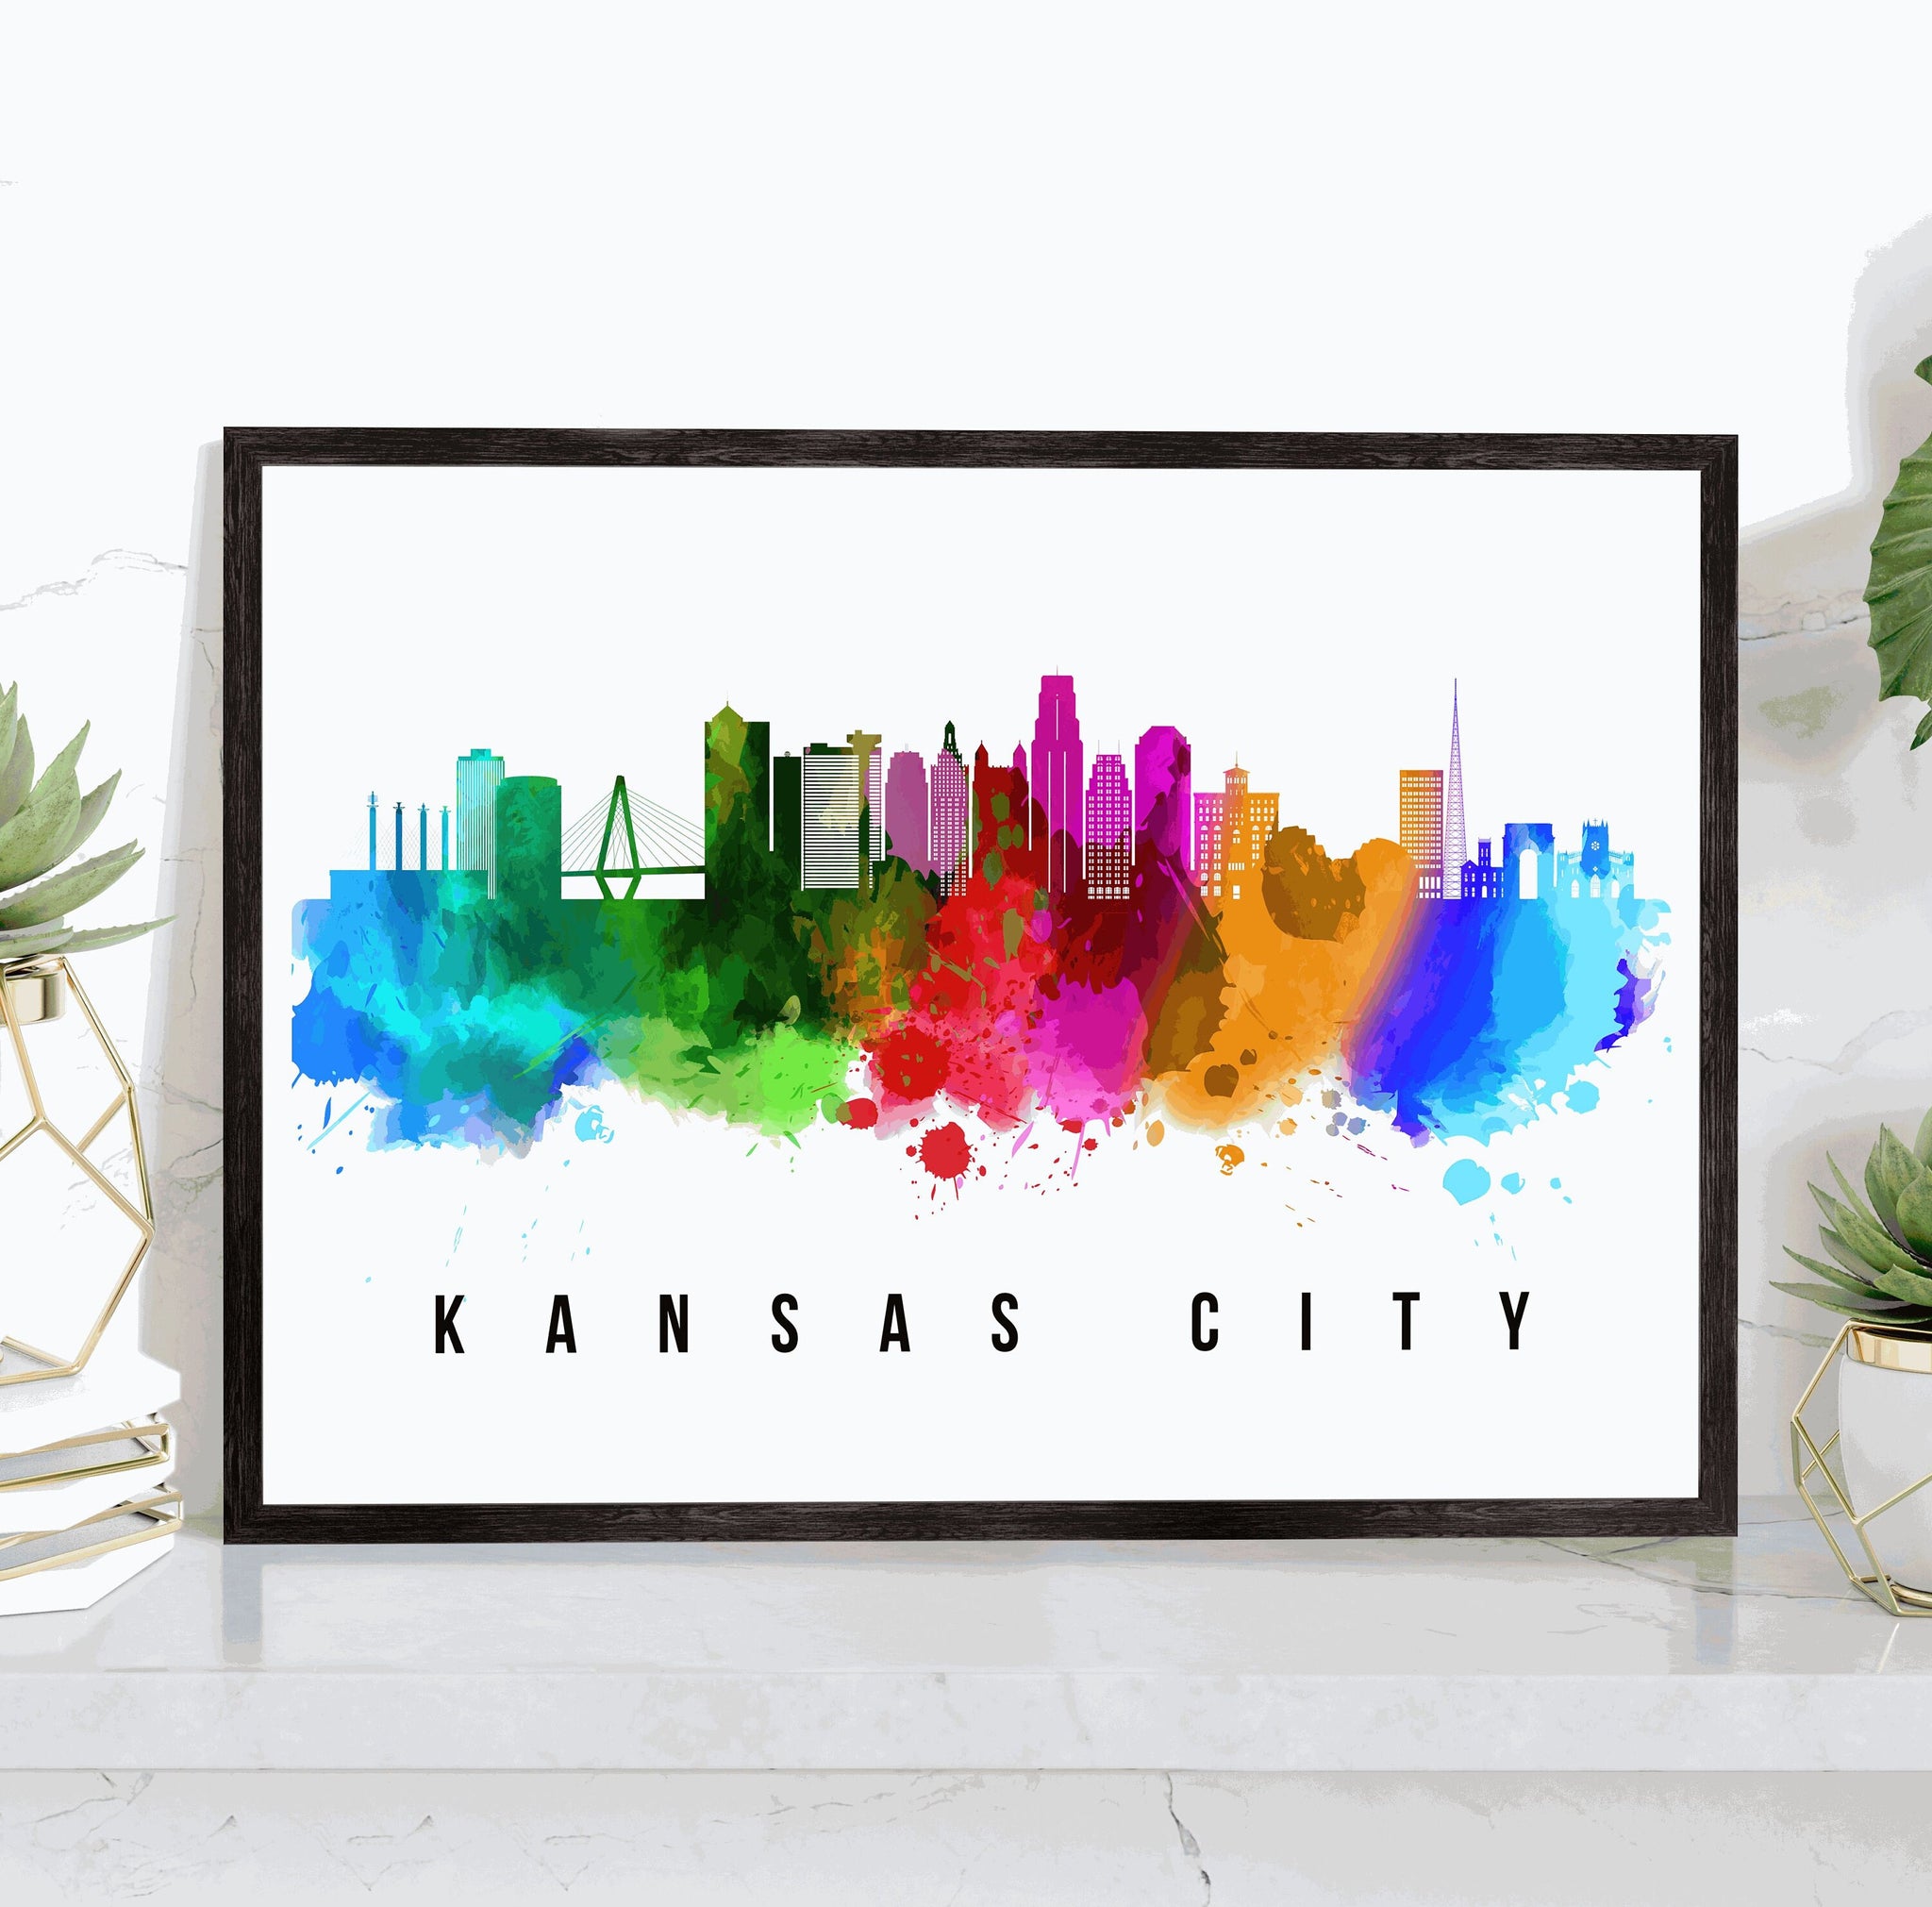 Kansas City - Missouri Skyline Poster, Cityscape Painting, Kansas City - Missouri Landmark and Cityscape Print, Home and Office Wall Art